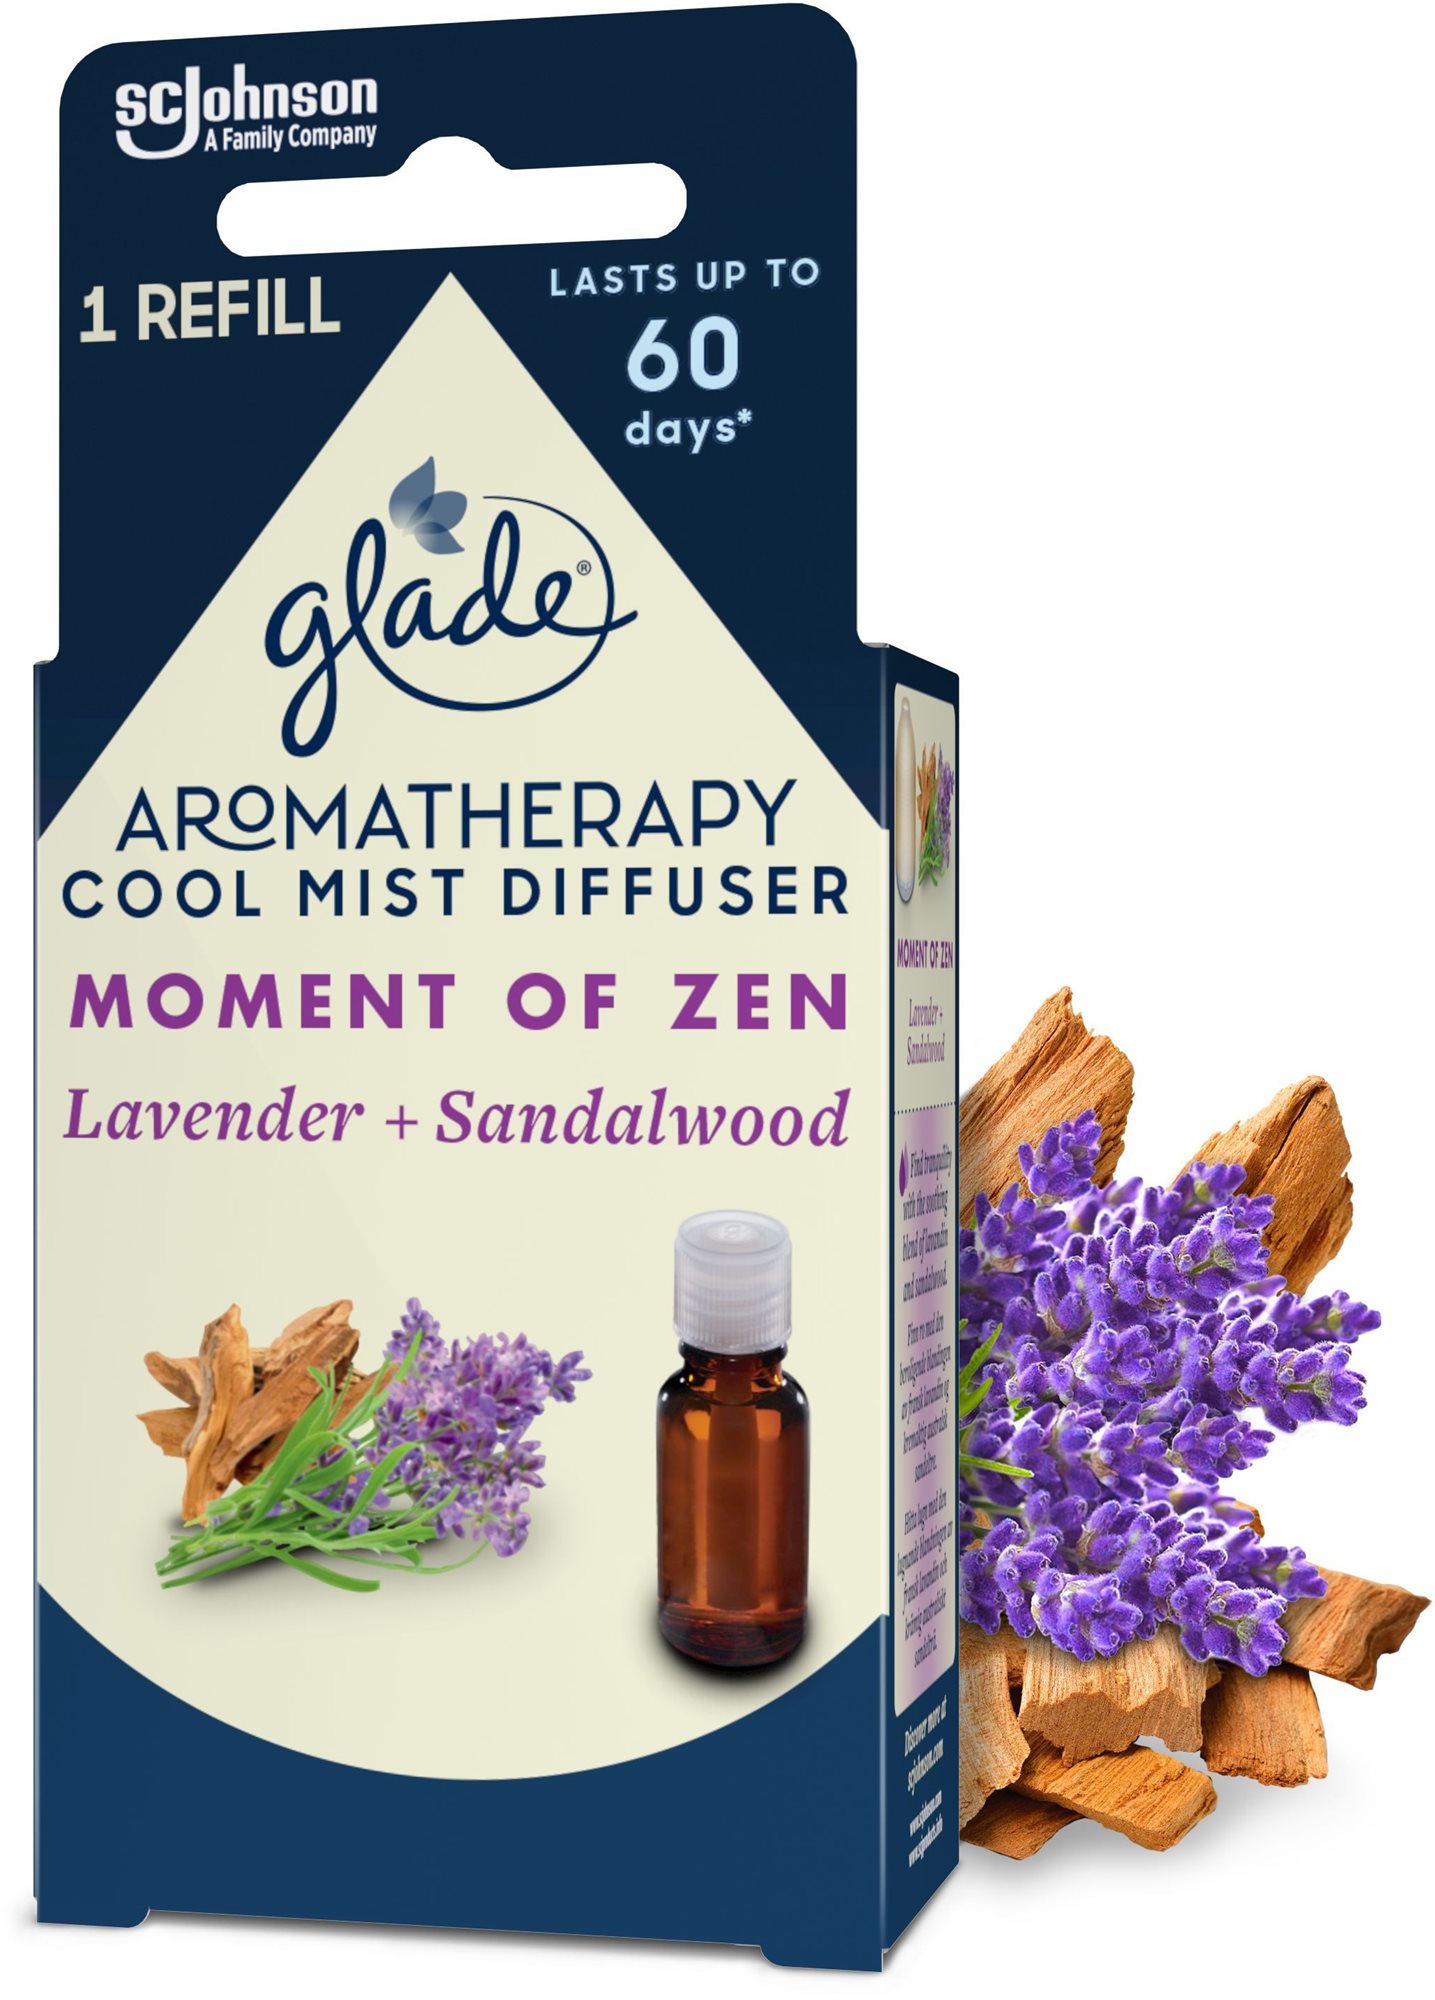 GLADE Aromatherapy Cool Mist Diffuser Moment of Zen utántöltő 17,4 ml